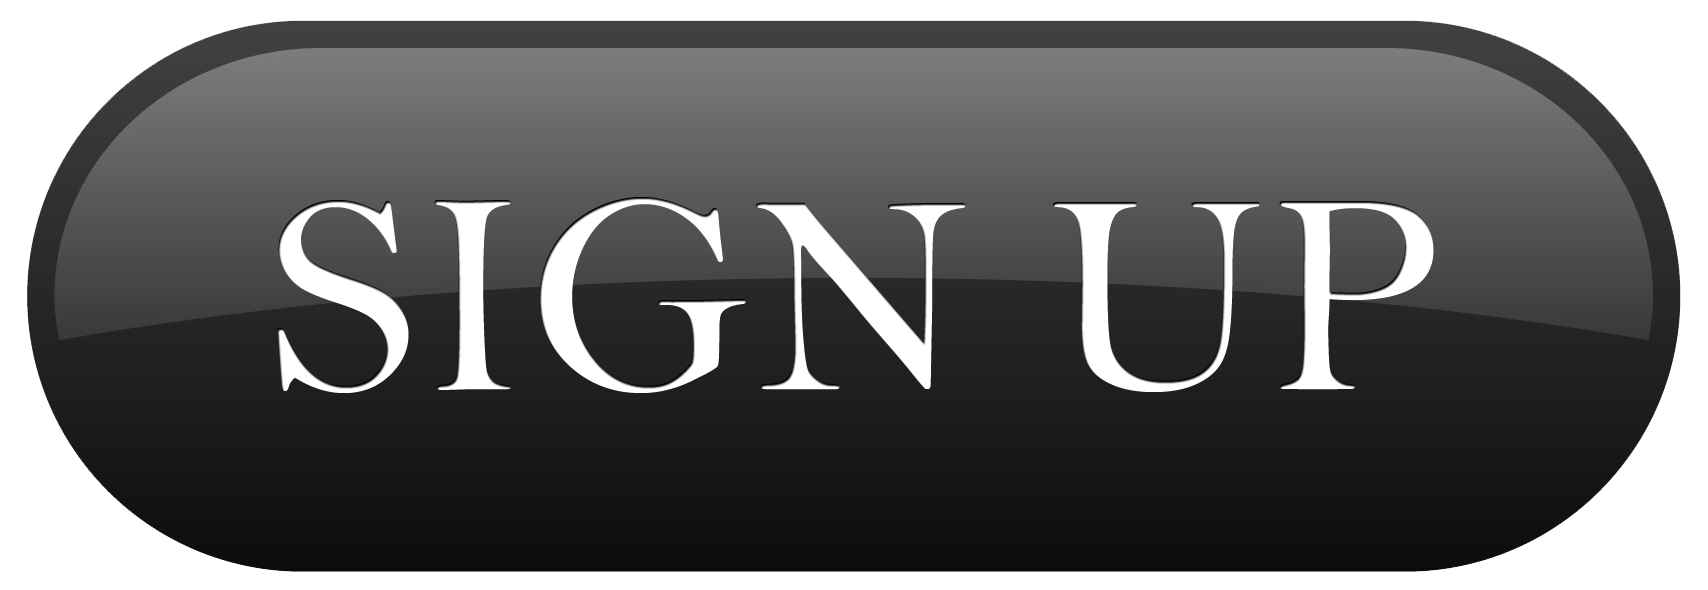 Download PNG image - Sign Up Button PNG Transparent Image 